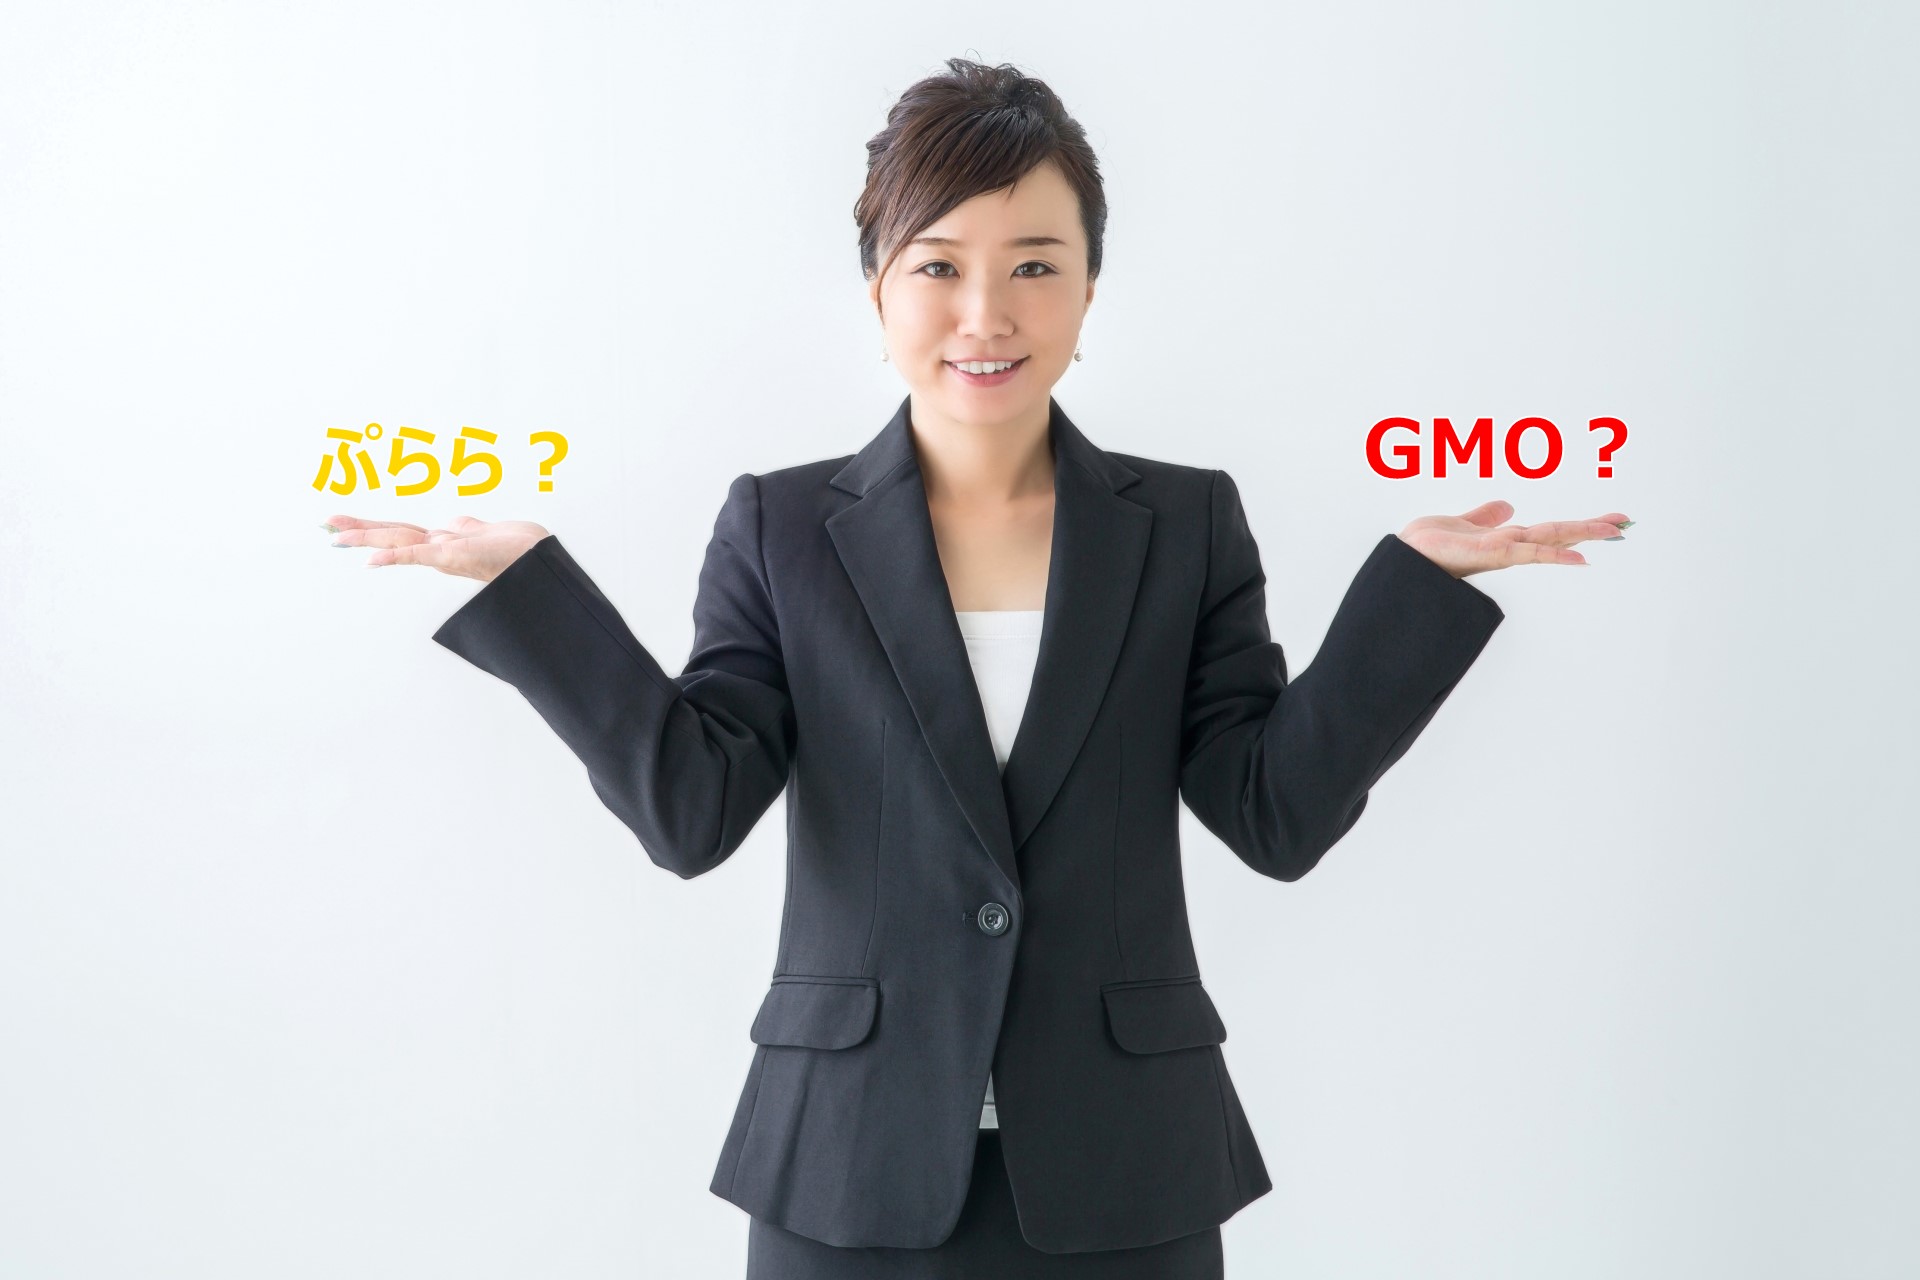 GMO vs Plala